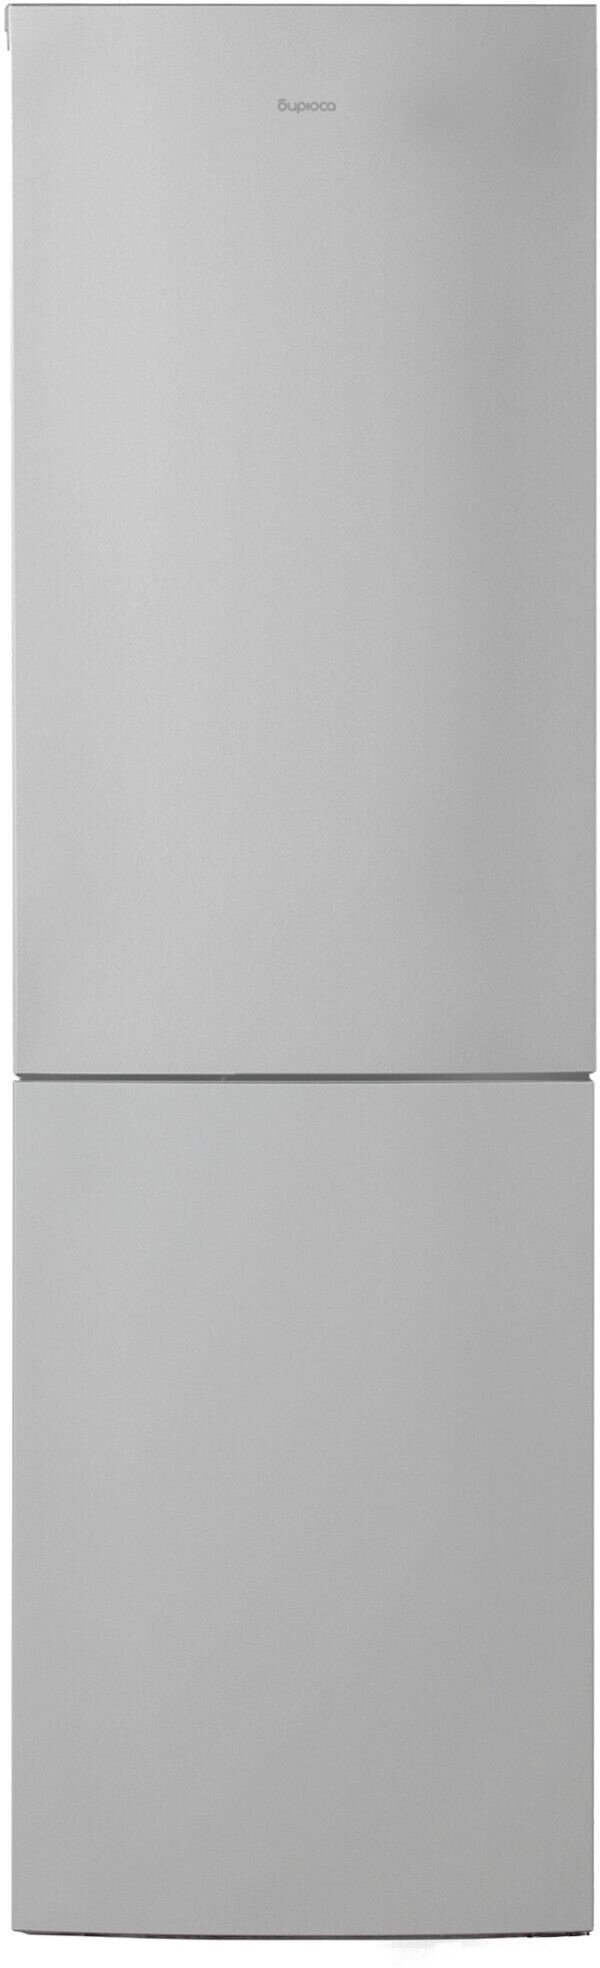 Холодильник Бирюса Б-M6049 2-хкамерн. серебристый металлик (двухкамерный)